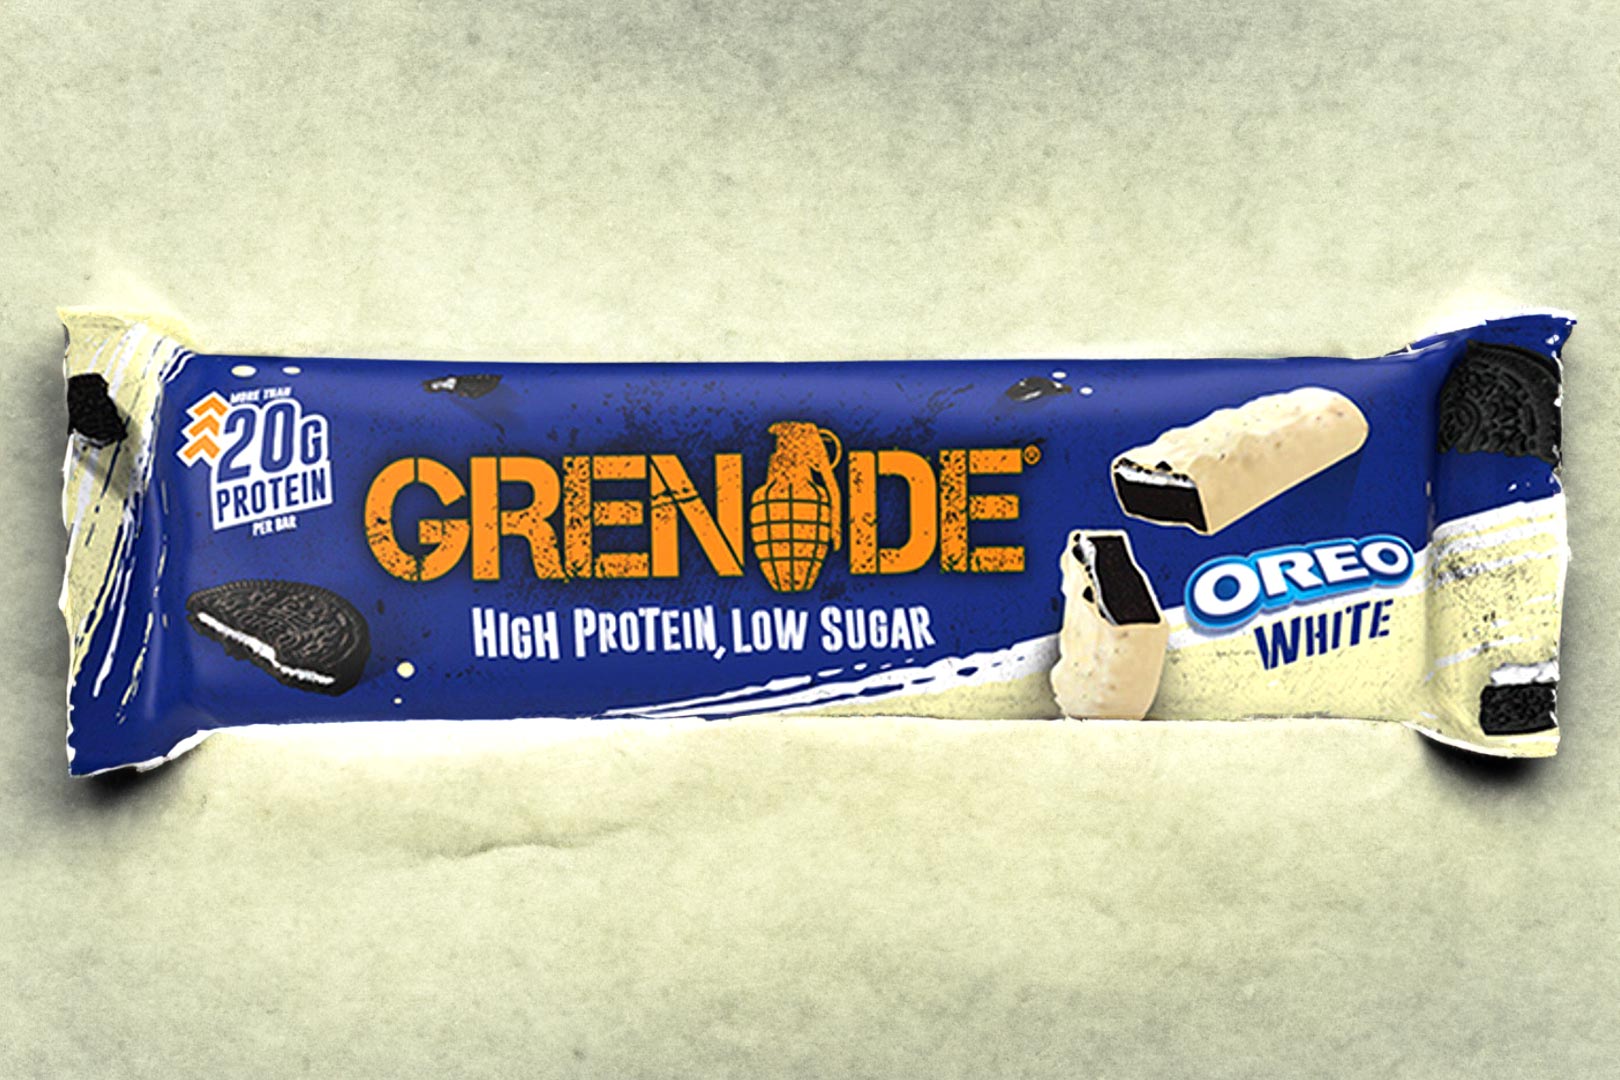 Oreo White Grenade Protein Bar